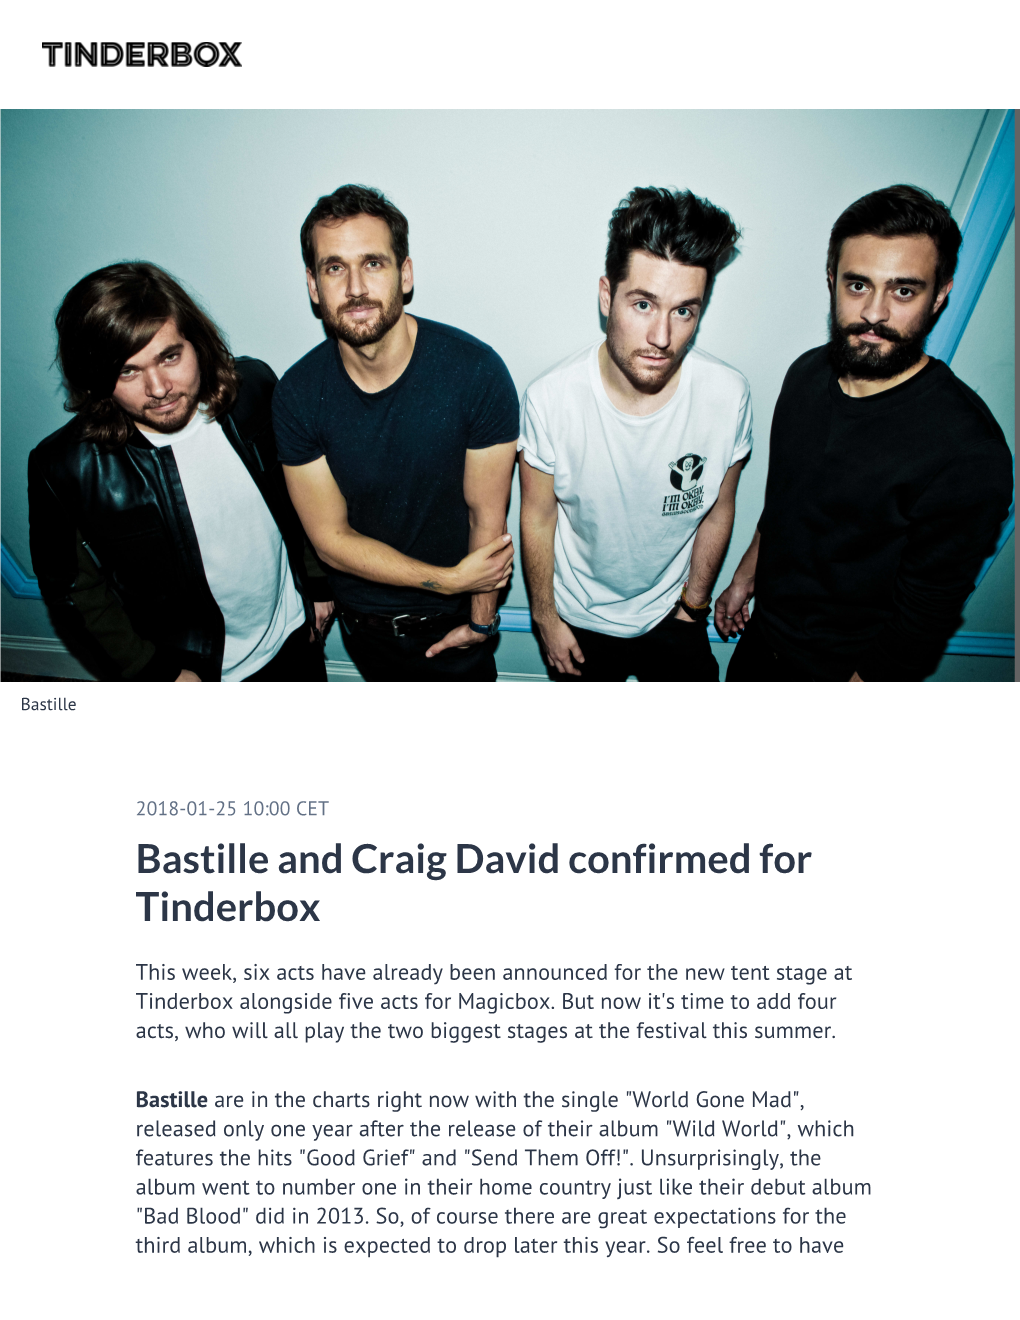 Bastille and Craig David Confirmed for Tinderbox